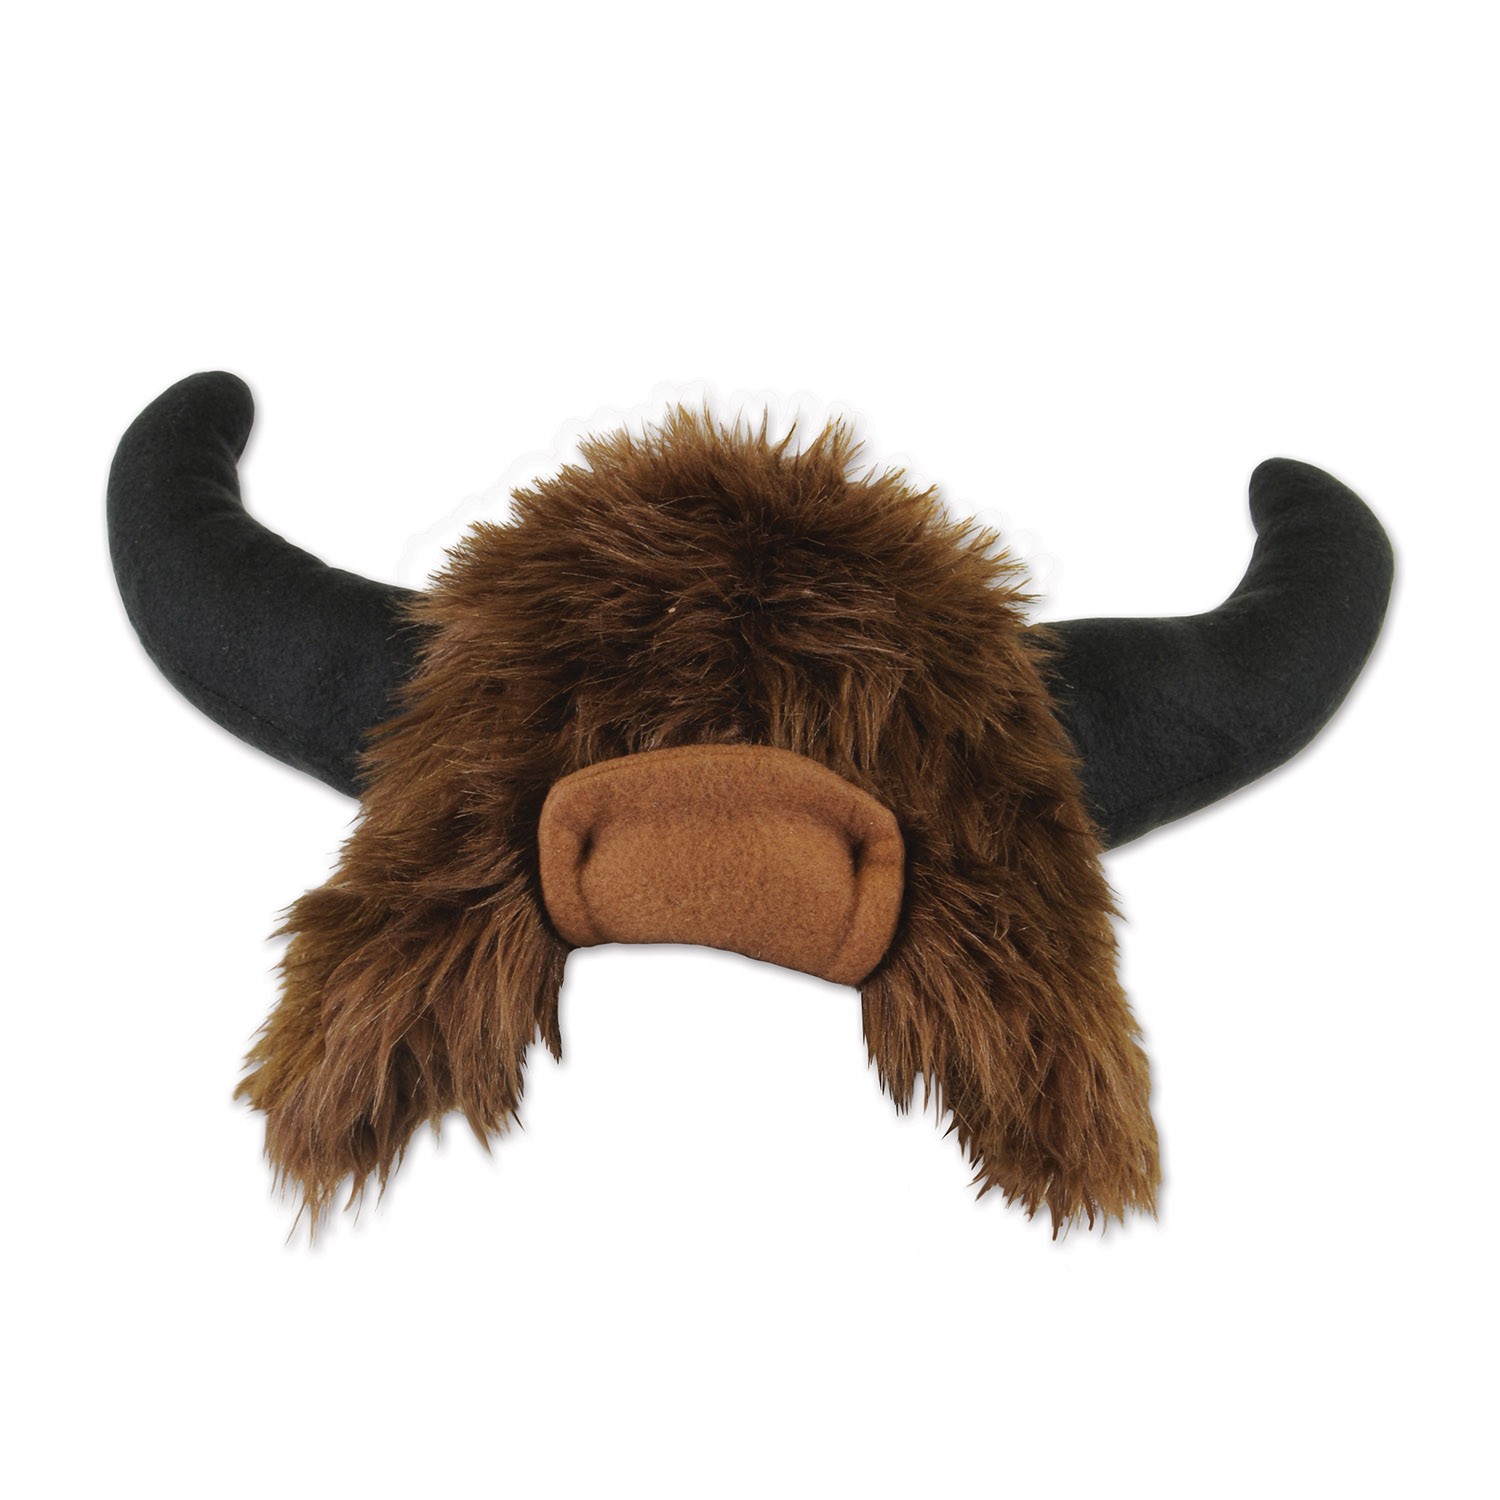 6 Pieces of Plush Buffalo Hat